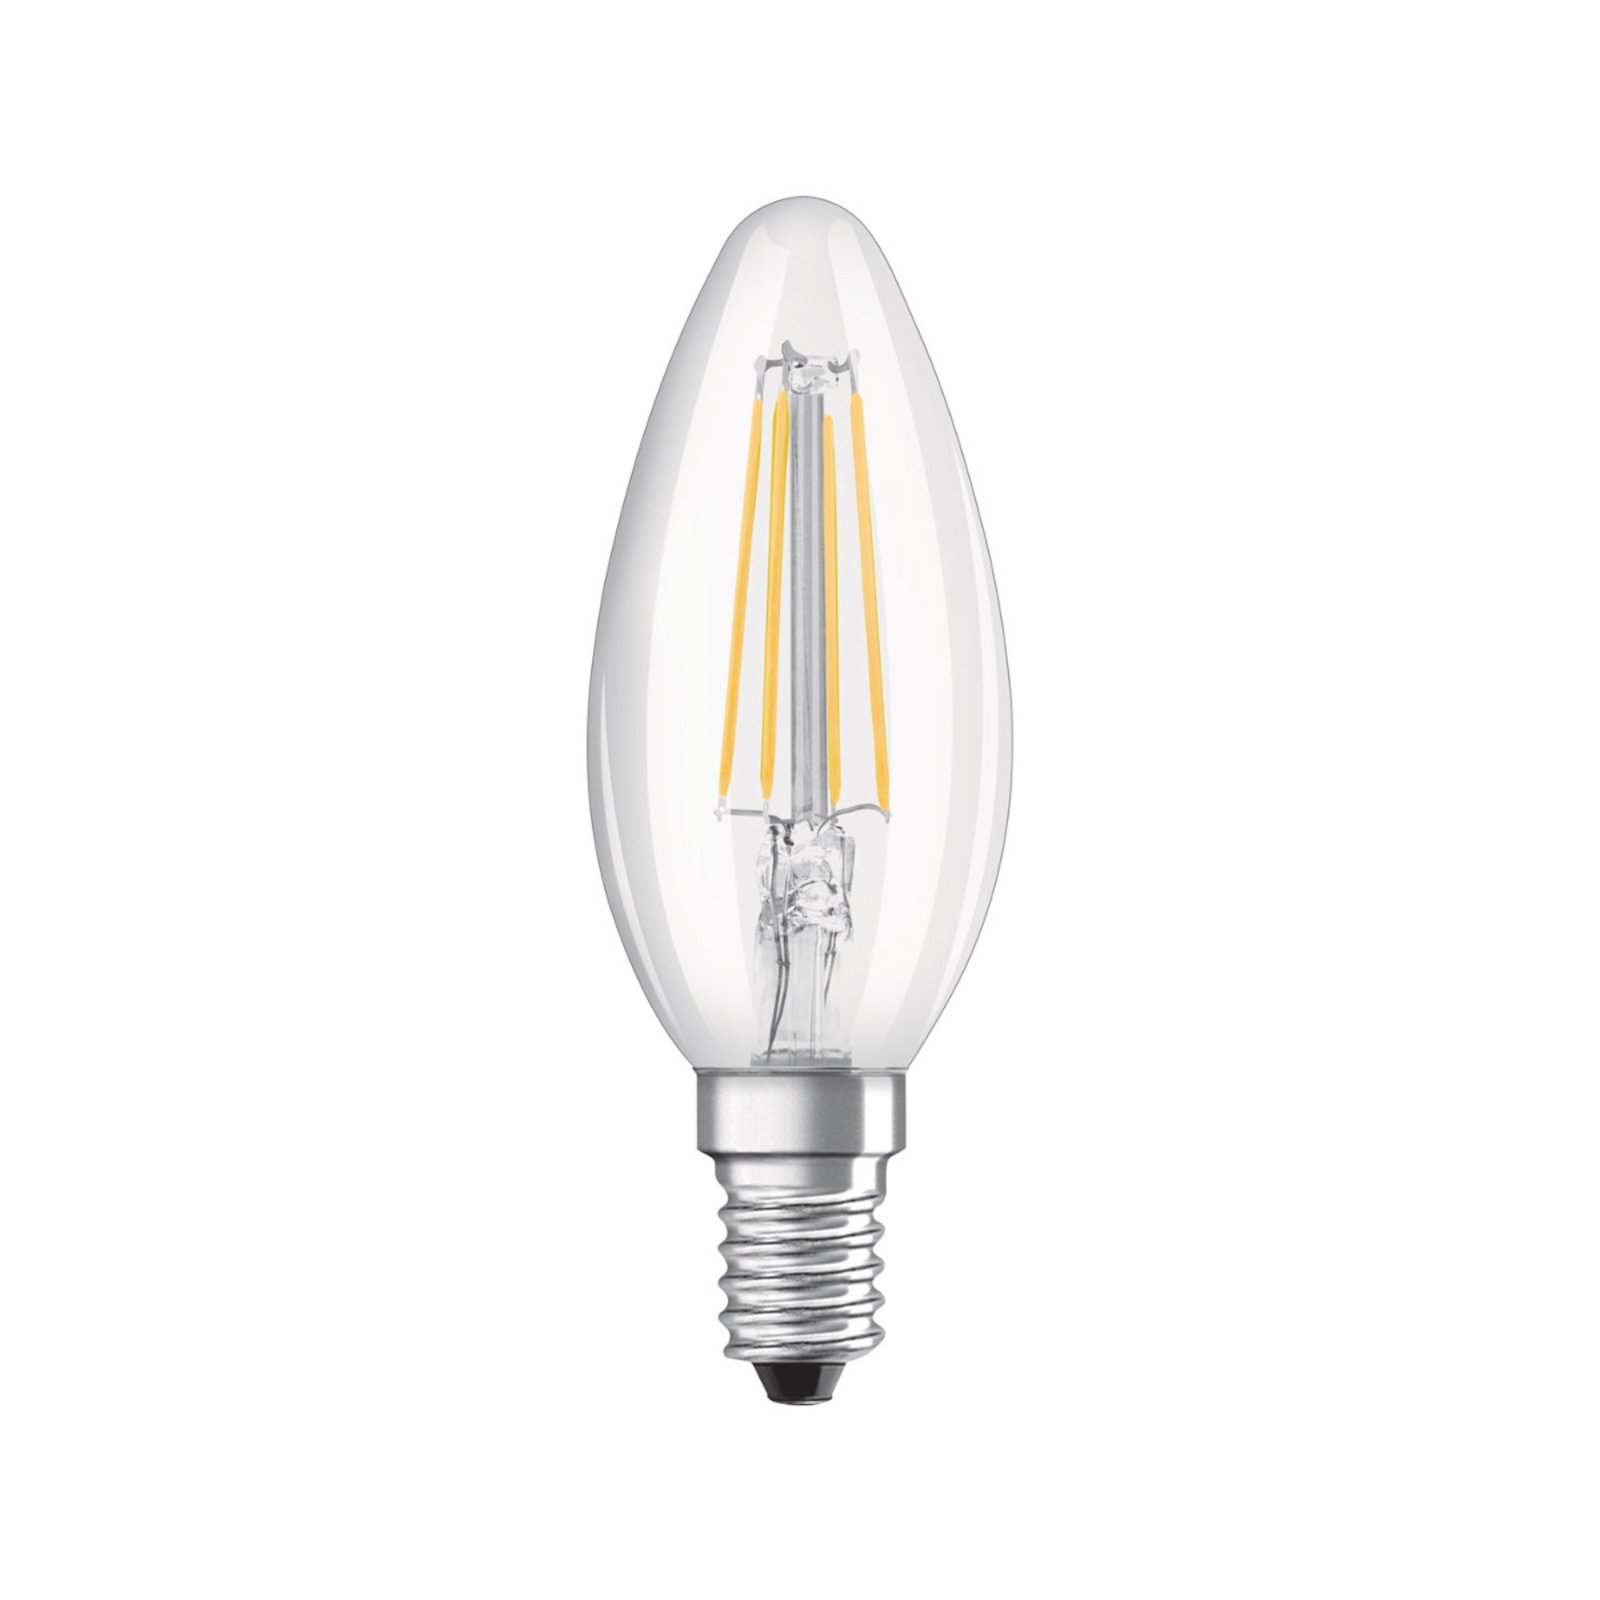 OSRAM candle LED bulb E14 4.8W cool white clear